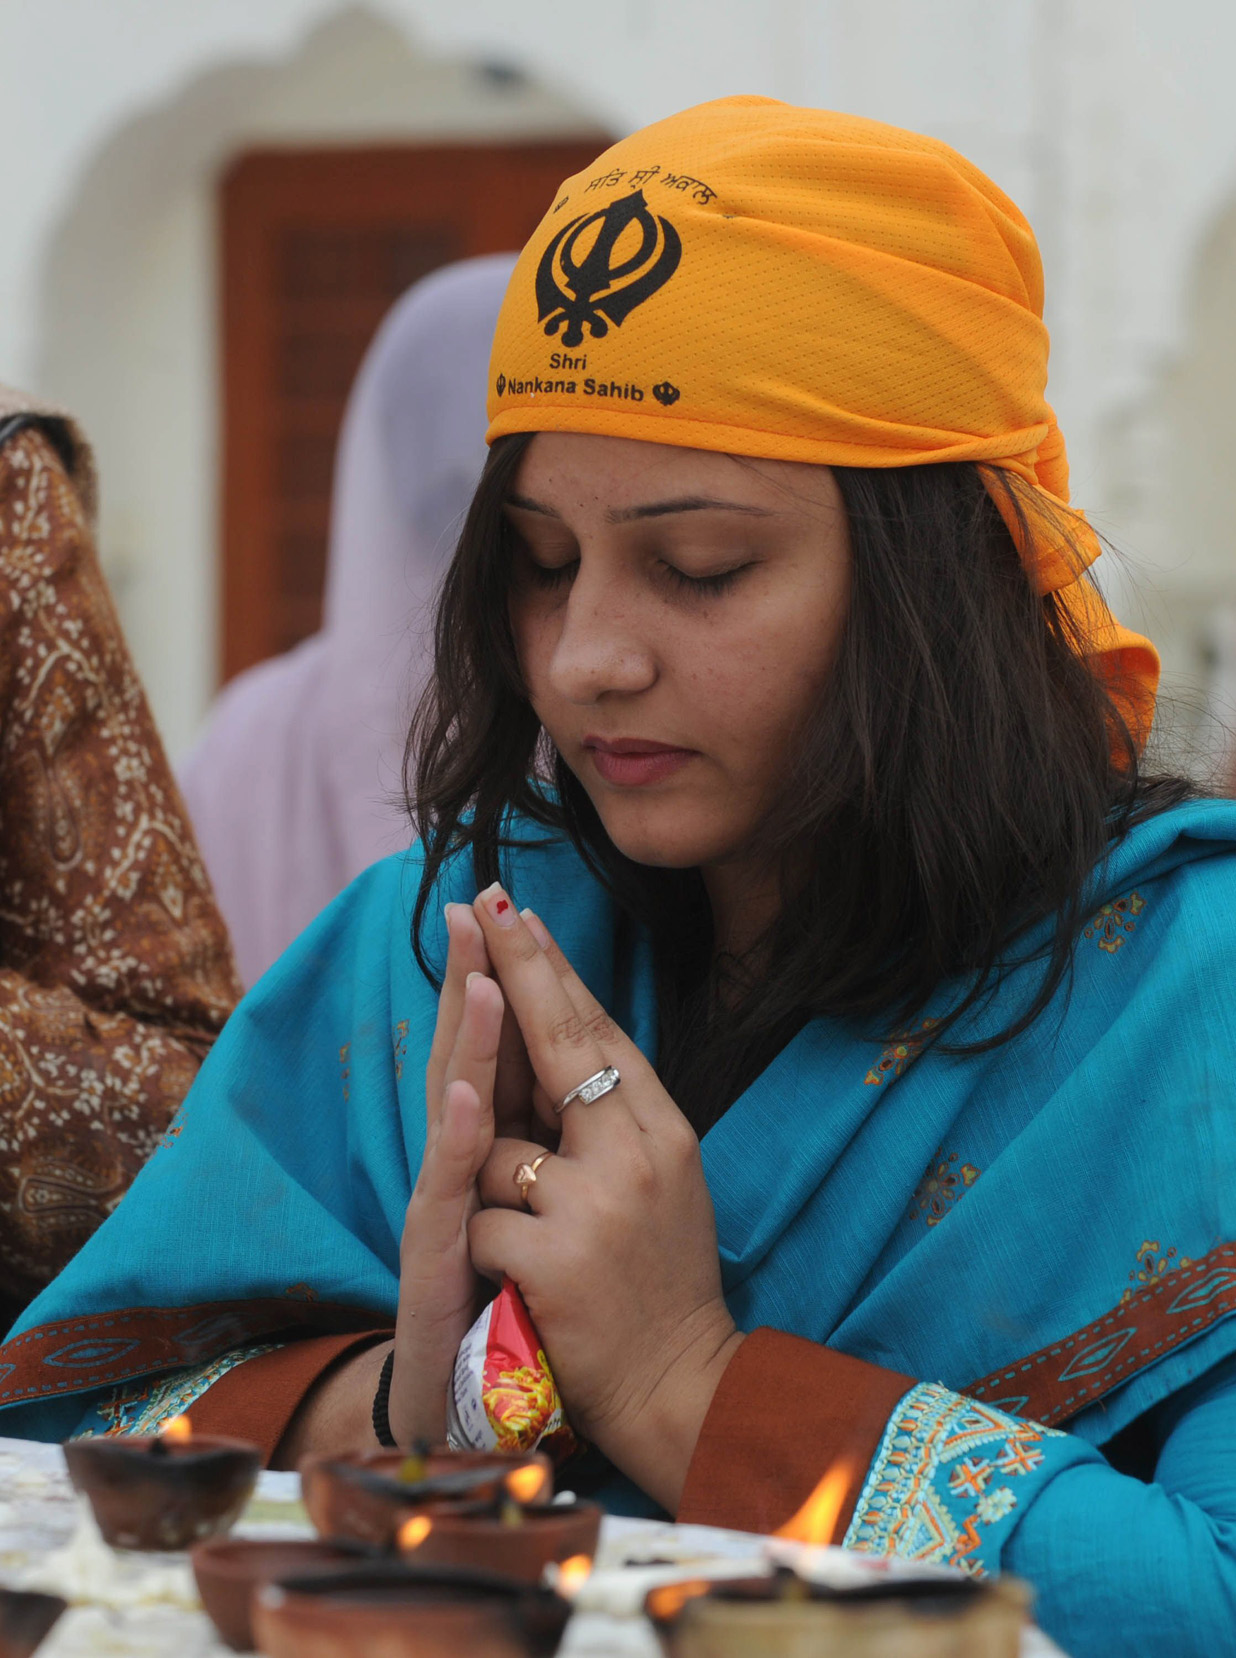 preparation of prasad for sikh pilgrims under way